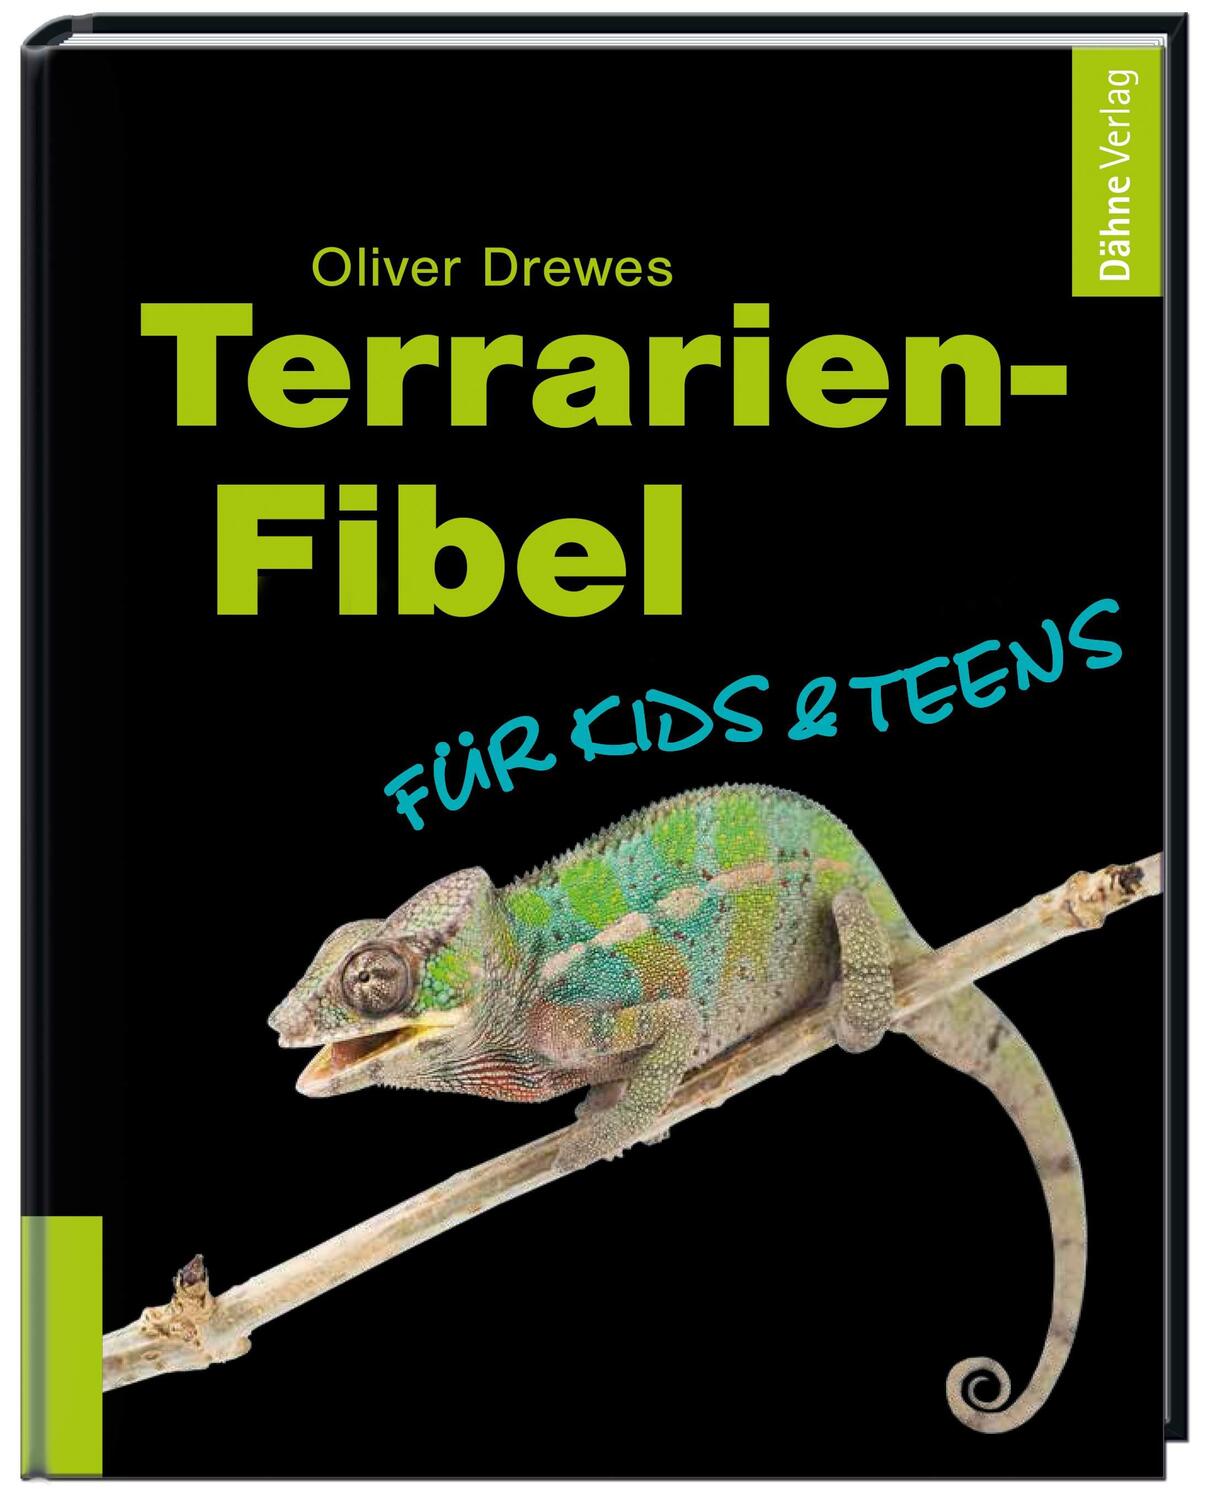 Terrarien-Fibel für Kids & Teens - Drewes, Oliver